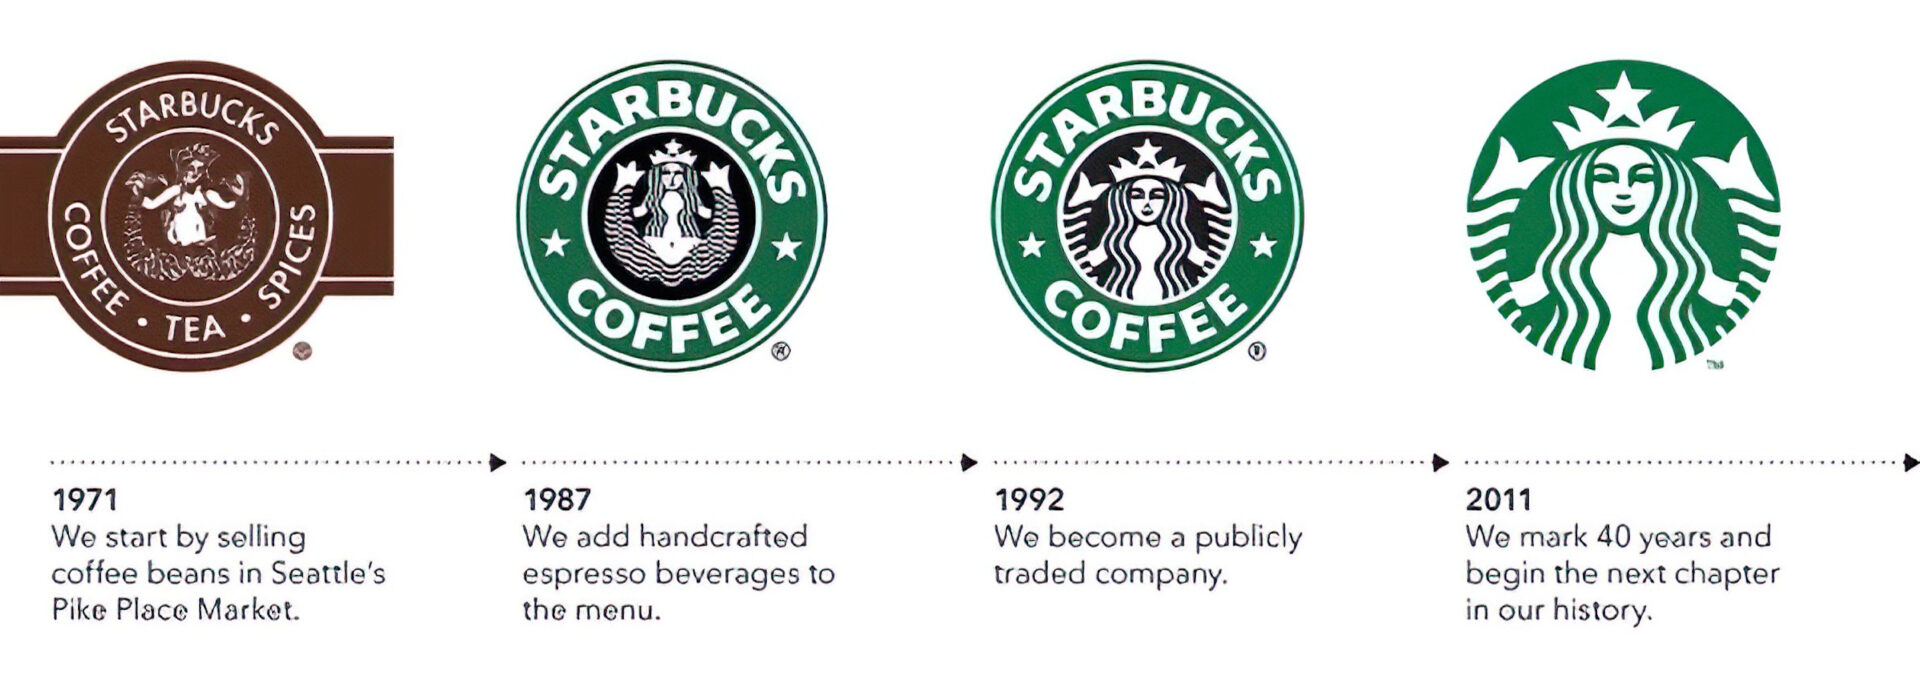 Starbucks-rebranding-example 